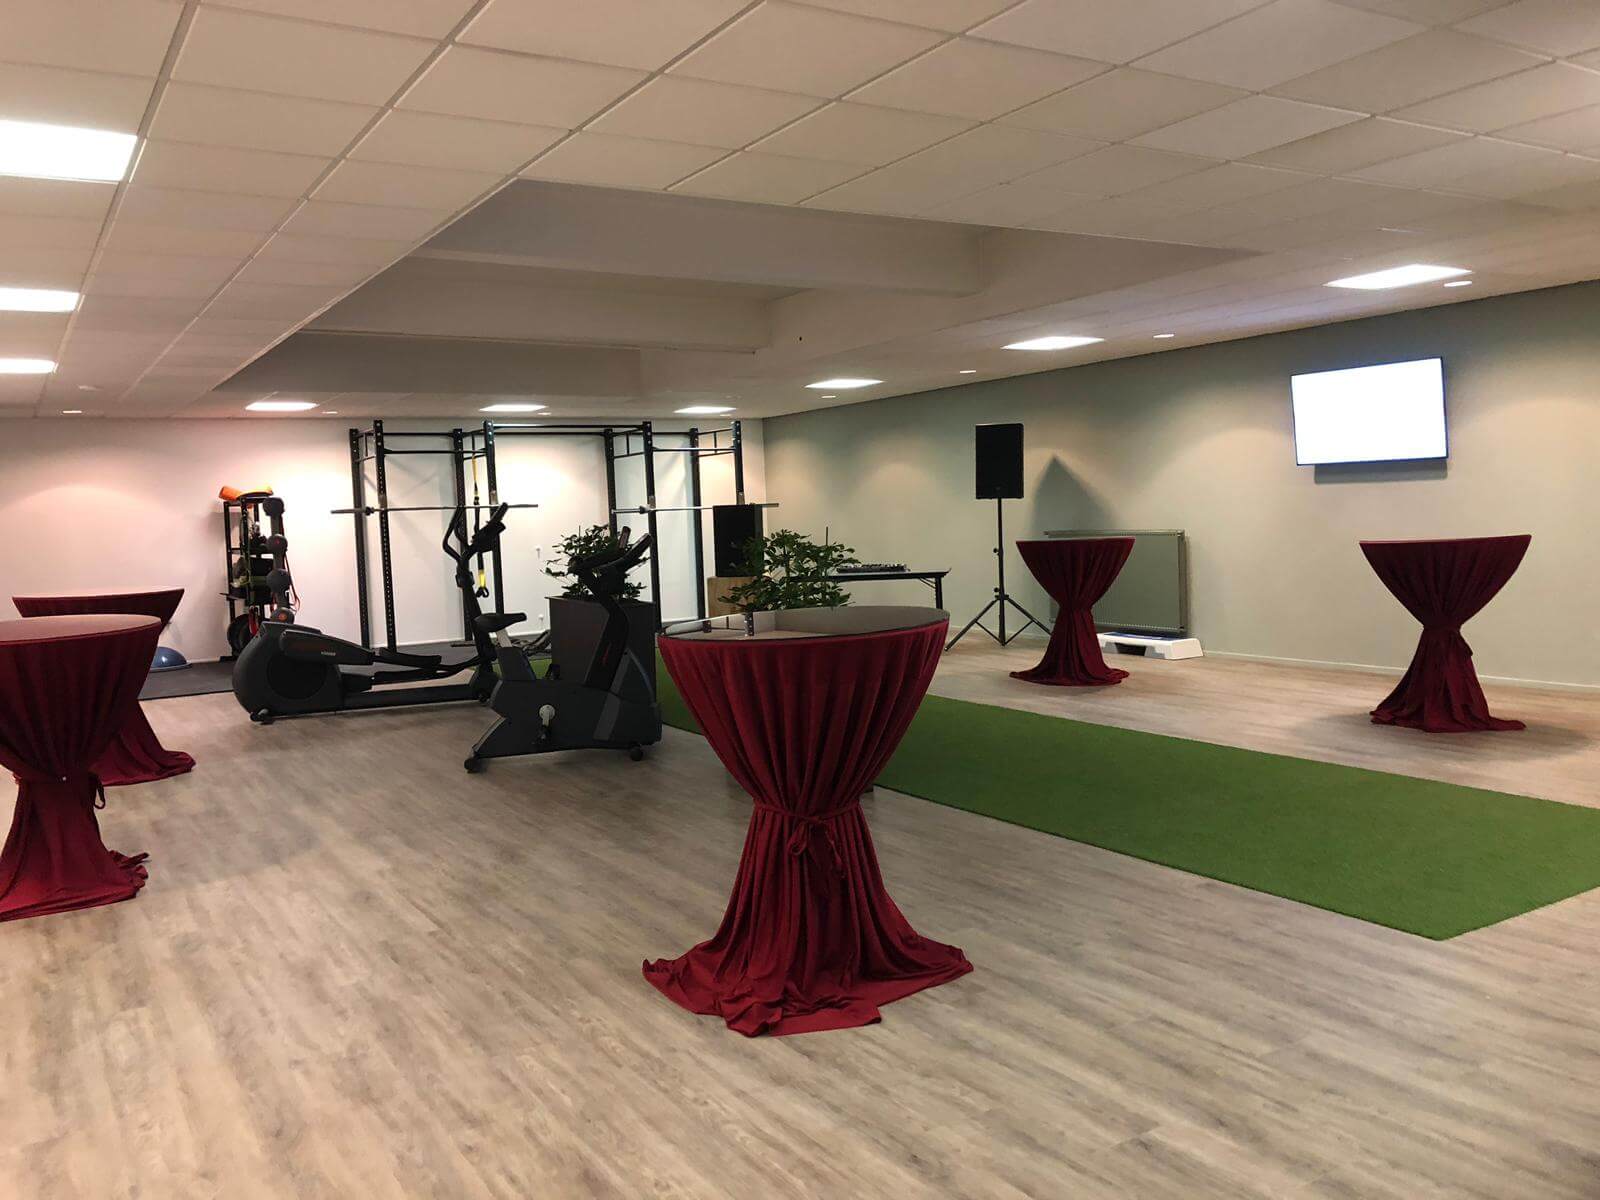 Personal Fit Club - De eerste club voor personal training in Zoetermeer is open (3)